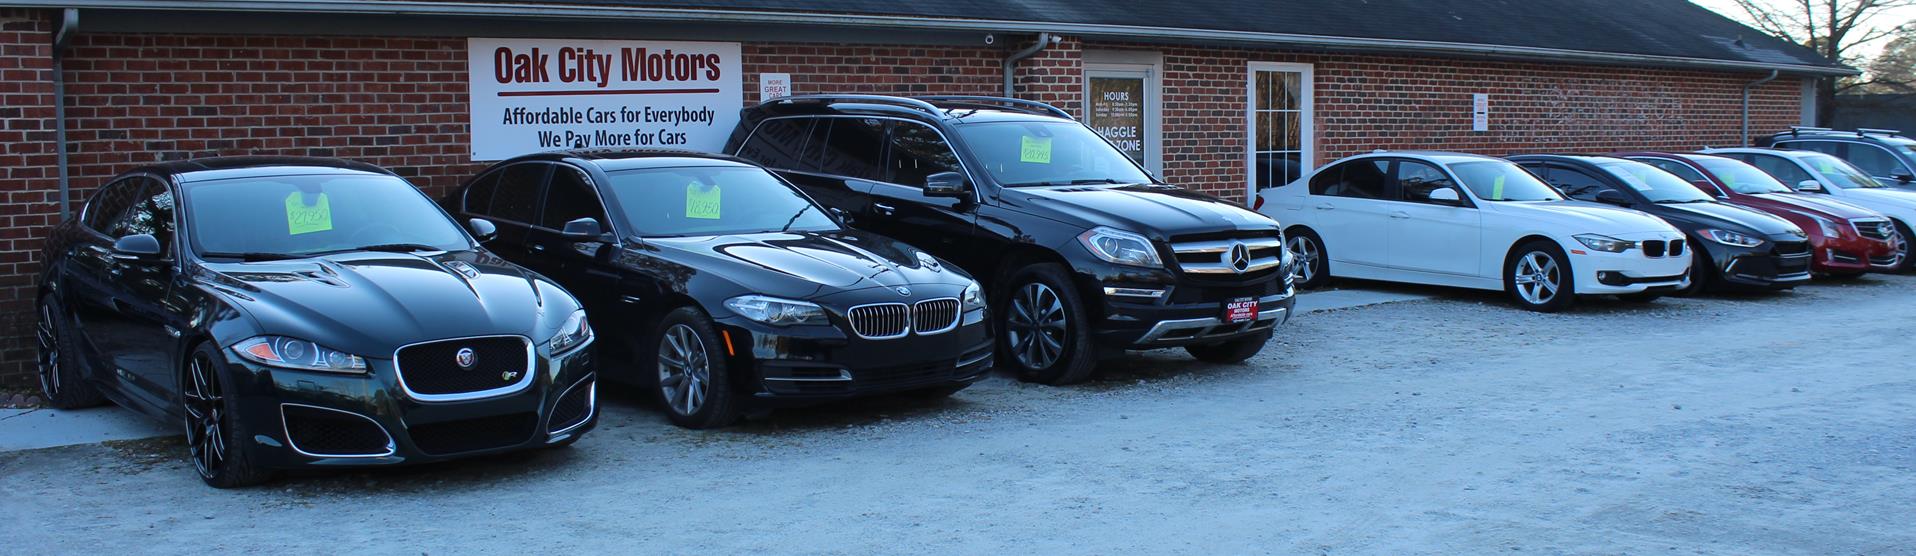 Buy Used Cars in Raleigh, NC, North Carolina Dealership